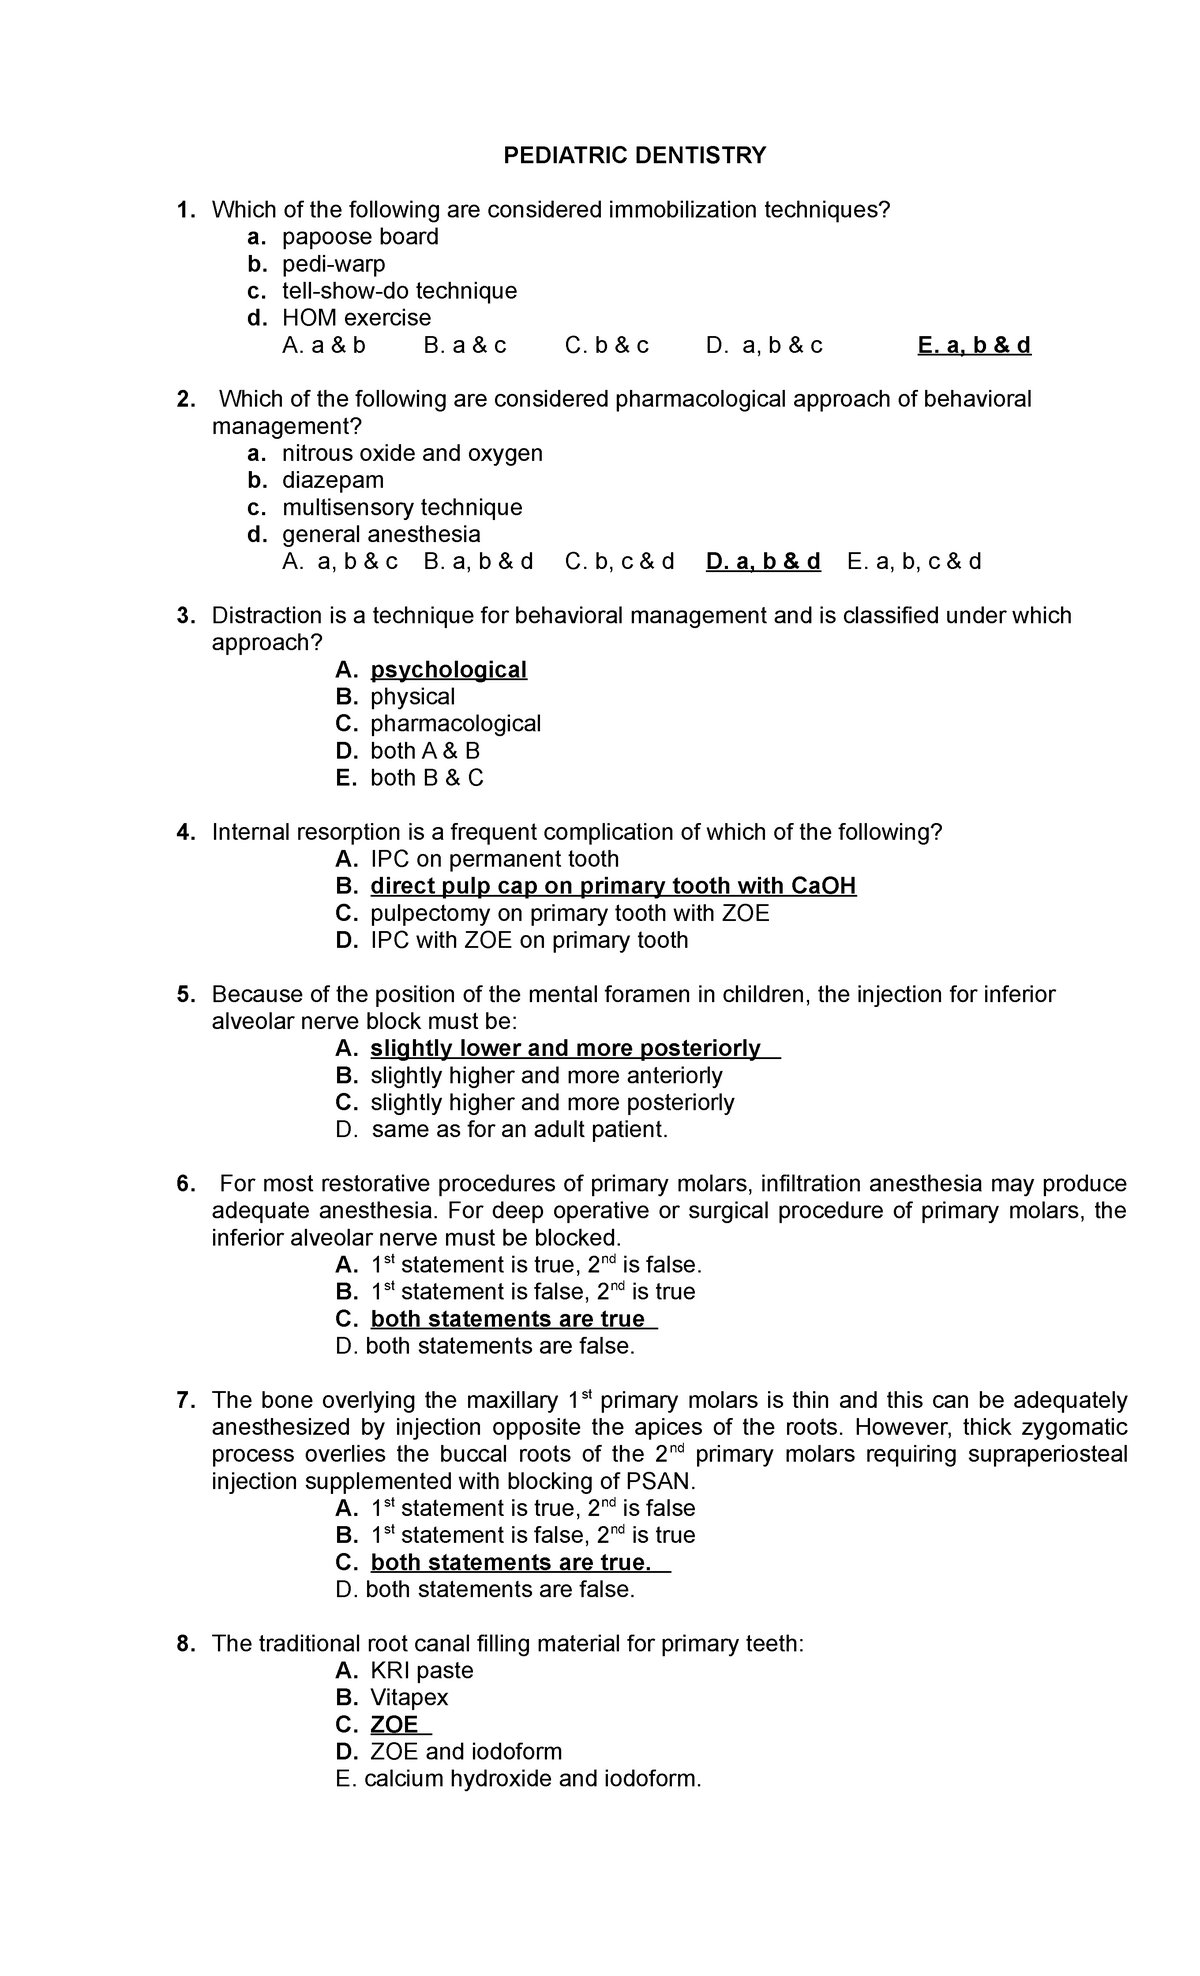 Pediatric Dentistry Board Questions 2008 PEDIATRIC DENTISTRY 1. Which